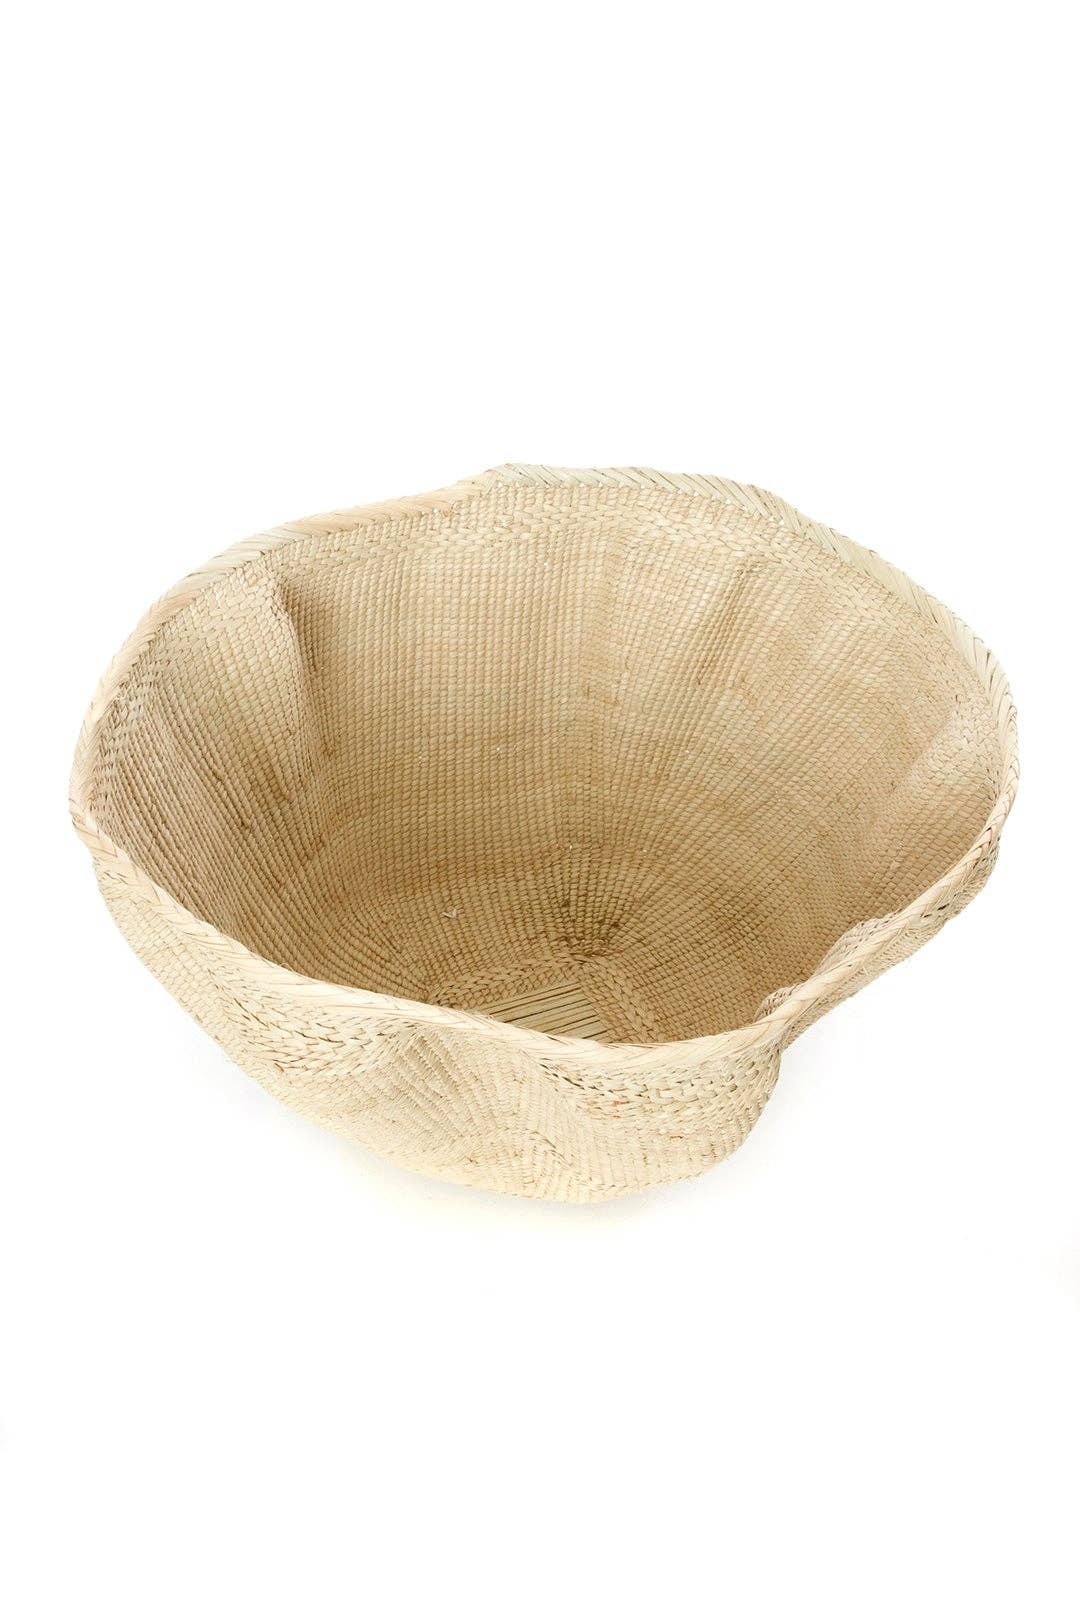 All Natural BaTonga Basket